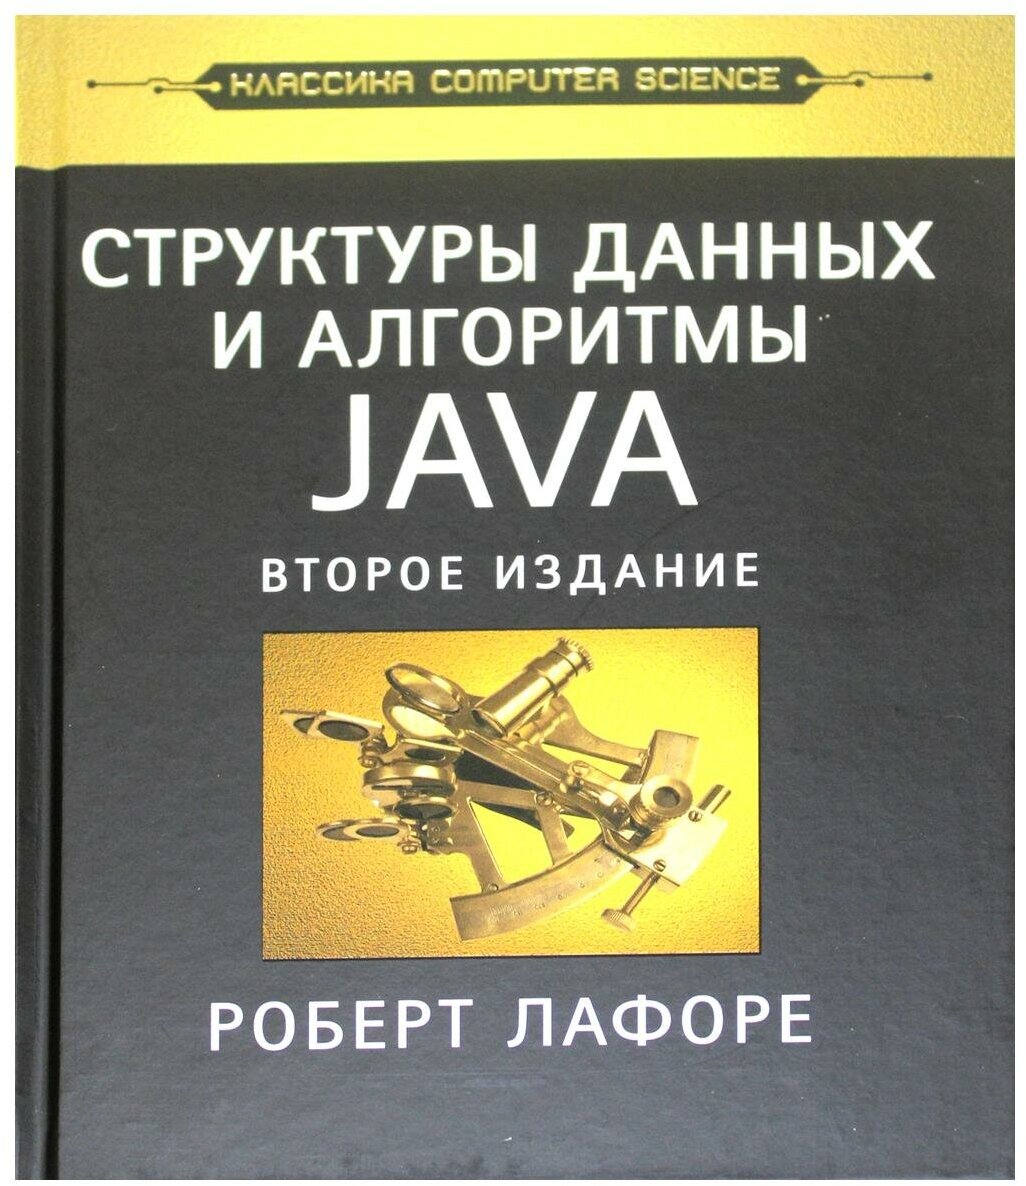 Структуры данных и алгоритмы в Java. Классика Computers Science - фото №6